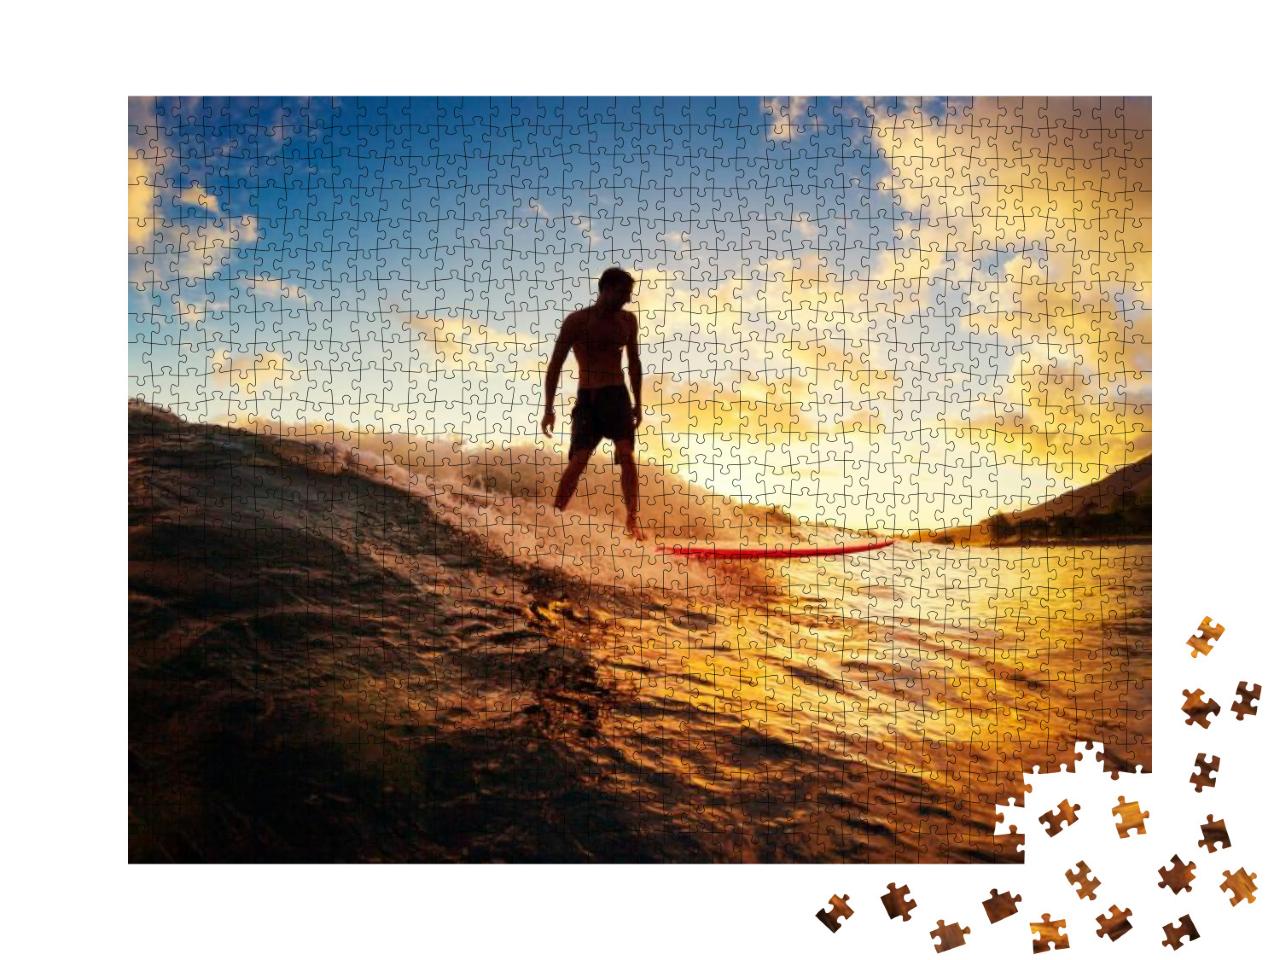 Puzzle 1000 Teile „Surfer im Sonnenuntergang“